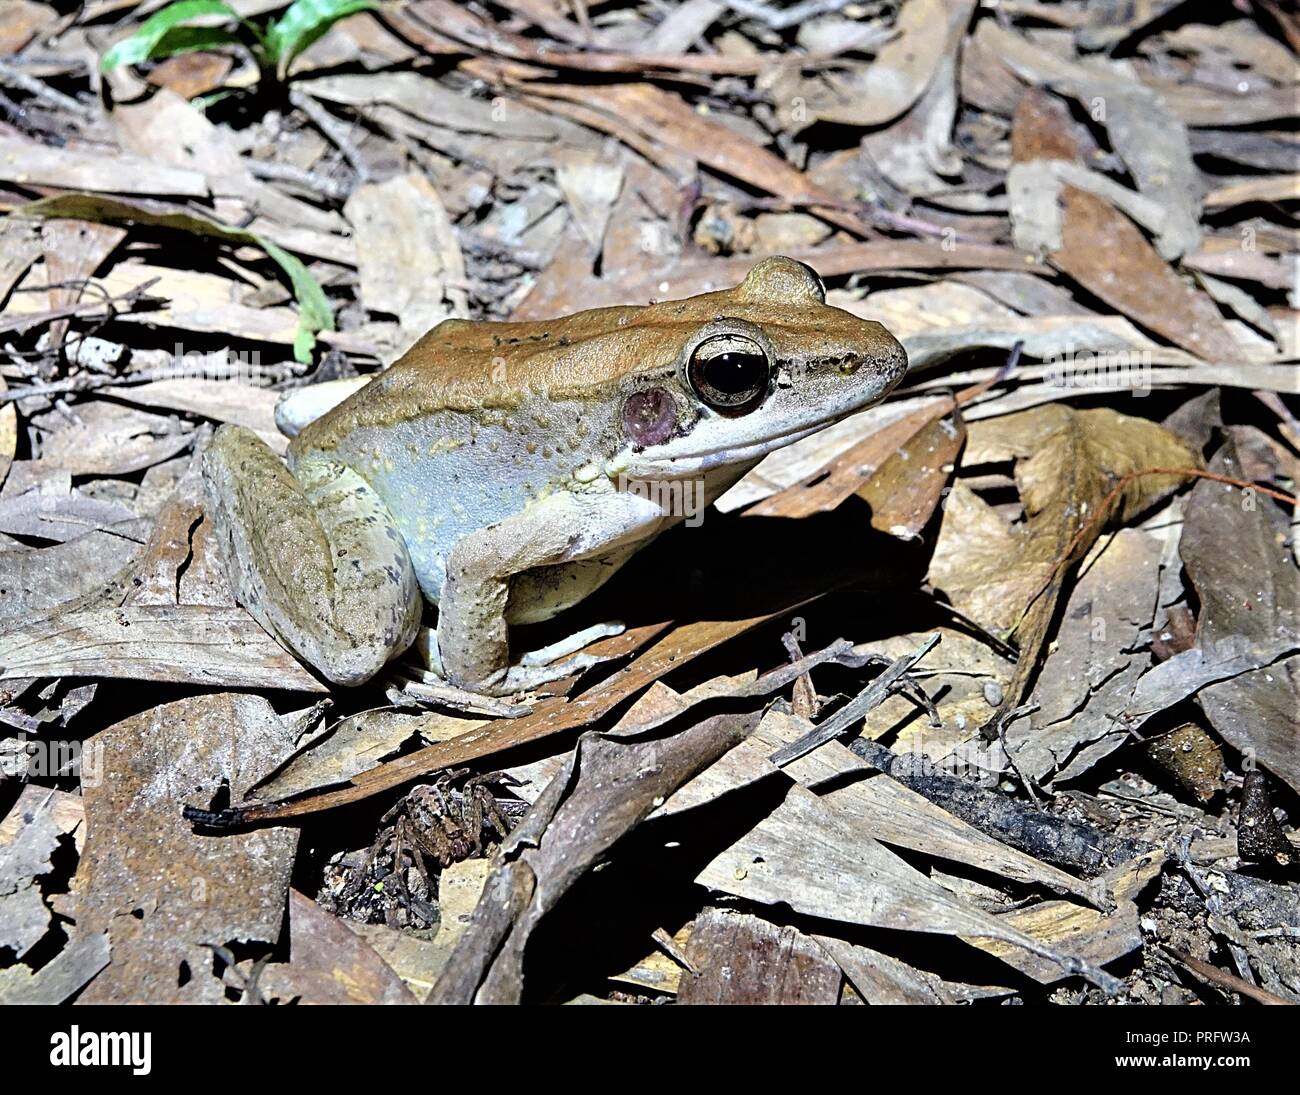 Australische Woodfrog, Papurana daemeli, Cape York Regenwald, Kutini-Payamu (Iron Range National Park), Far North Queensland, Australien Stockfoto